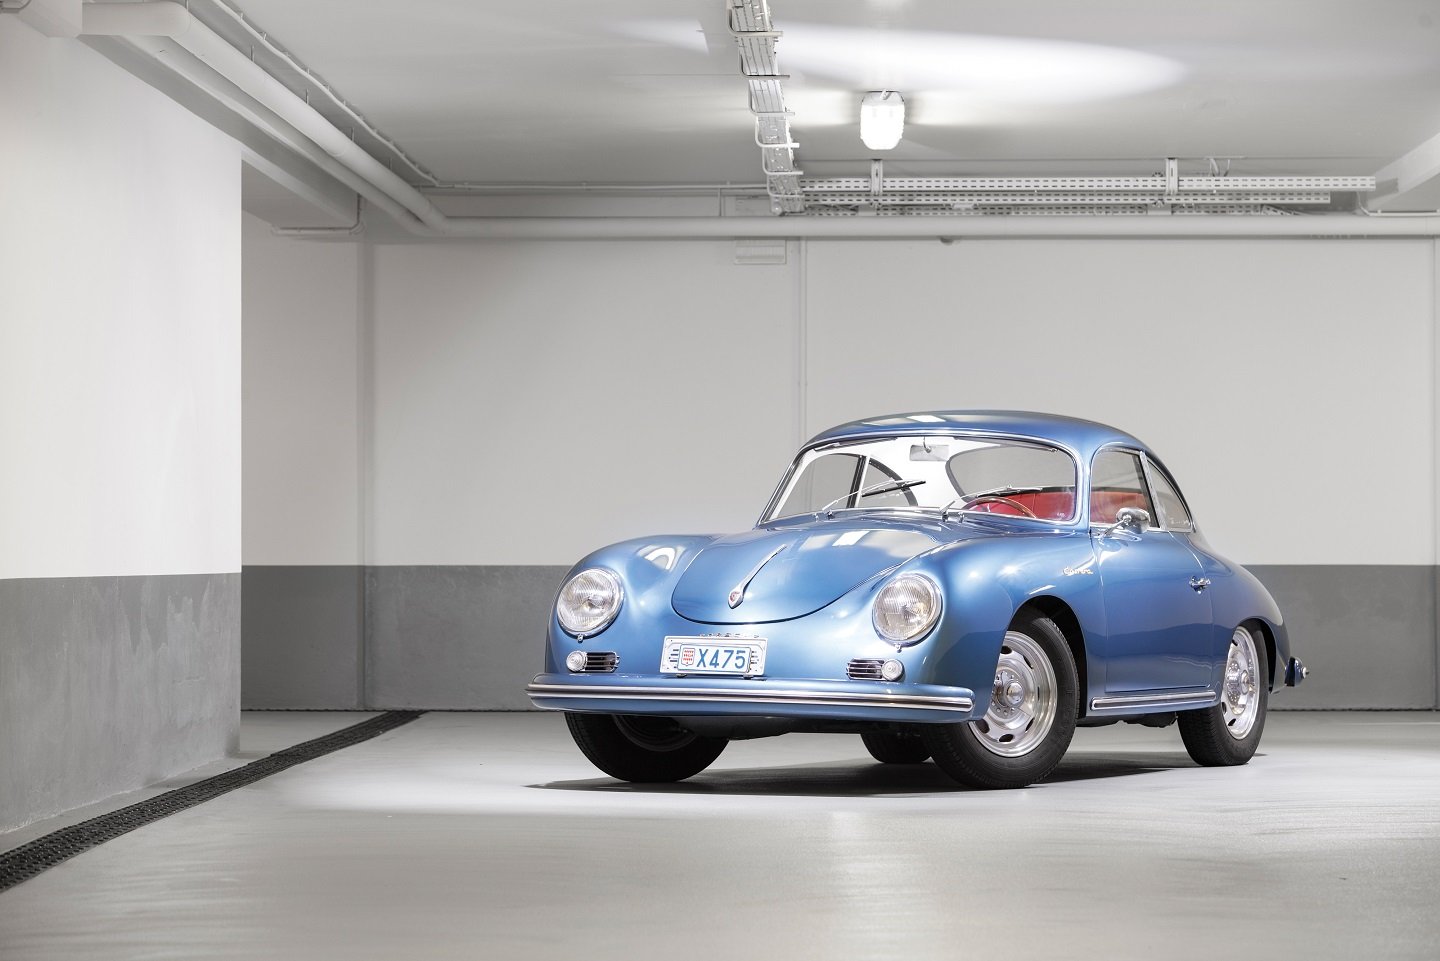 1600, 1957, 356a, Cars, Classic, Carrera, Coupe, Drauz, Porsche, 1500 gs Wallpaper